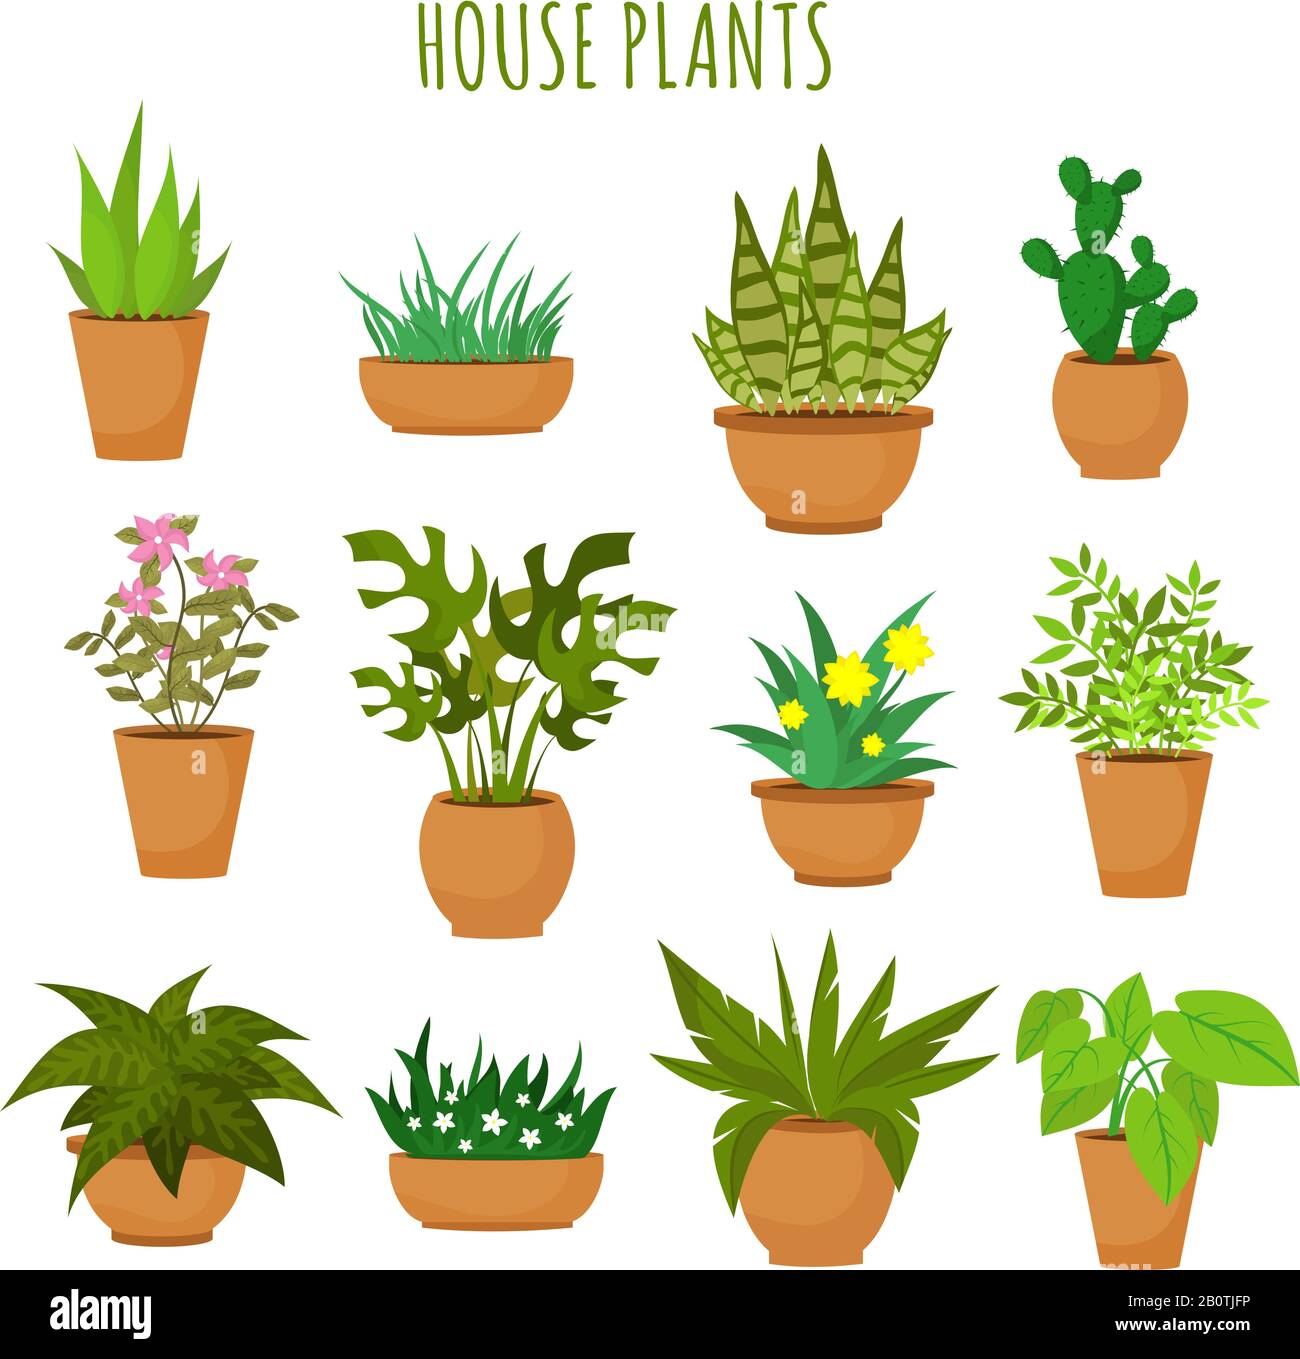 Casa interna piante verdi e fiori isolati su bianco vettore set. Piante verdi in vasi, illustrazione di piante di fiori verdi del giardino Illustrazione Vettoriale